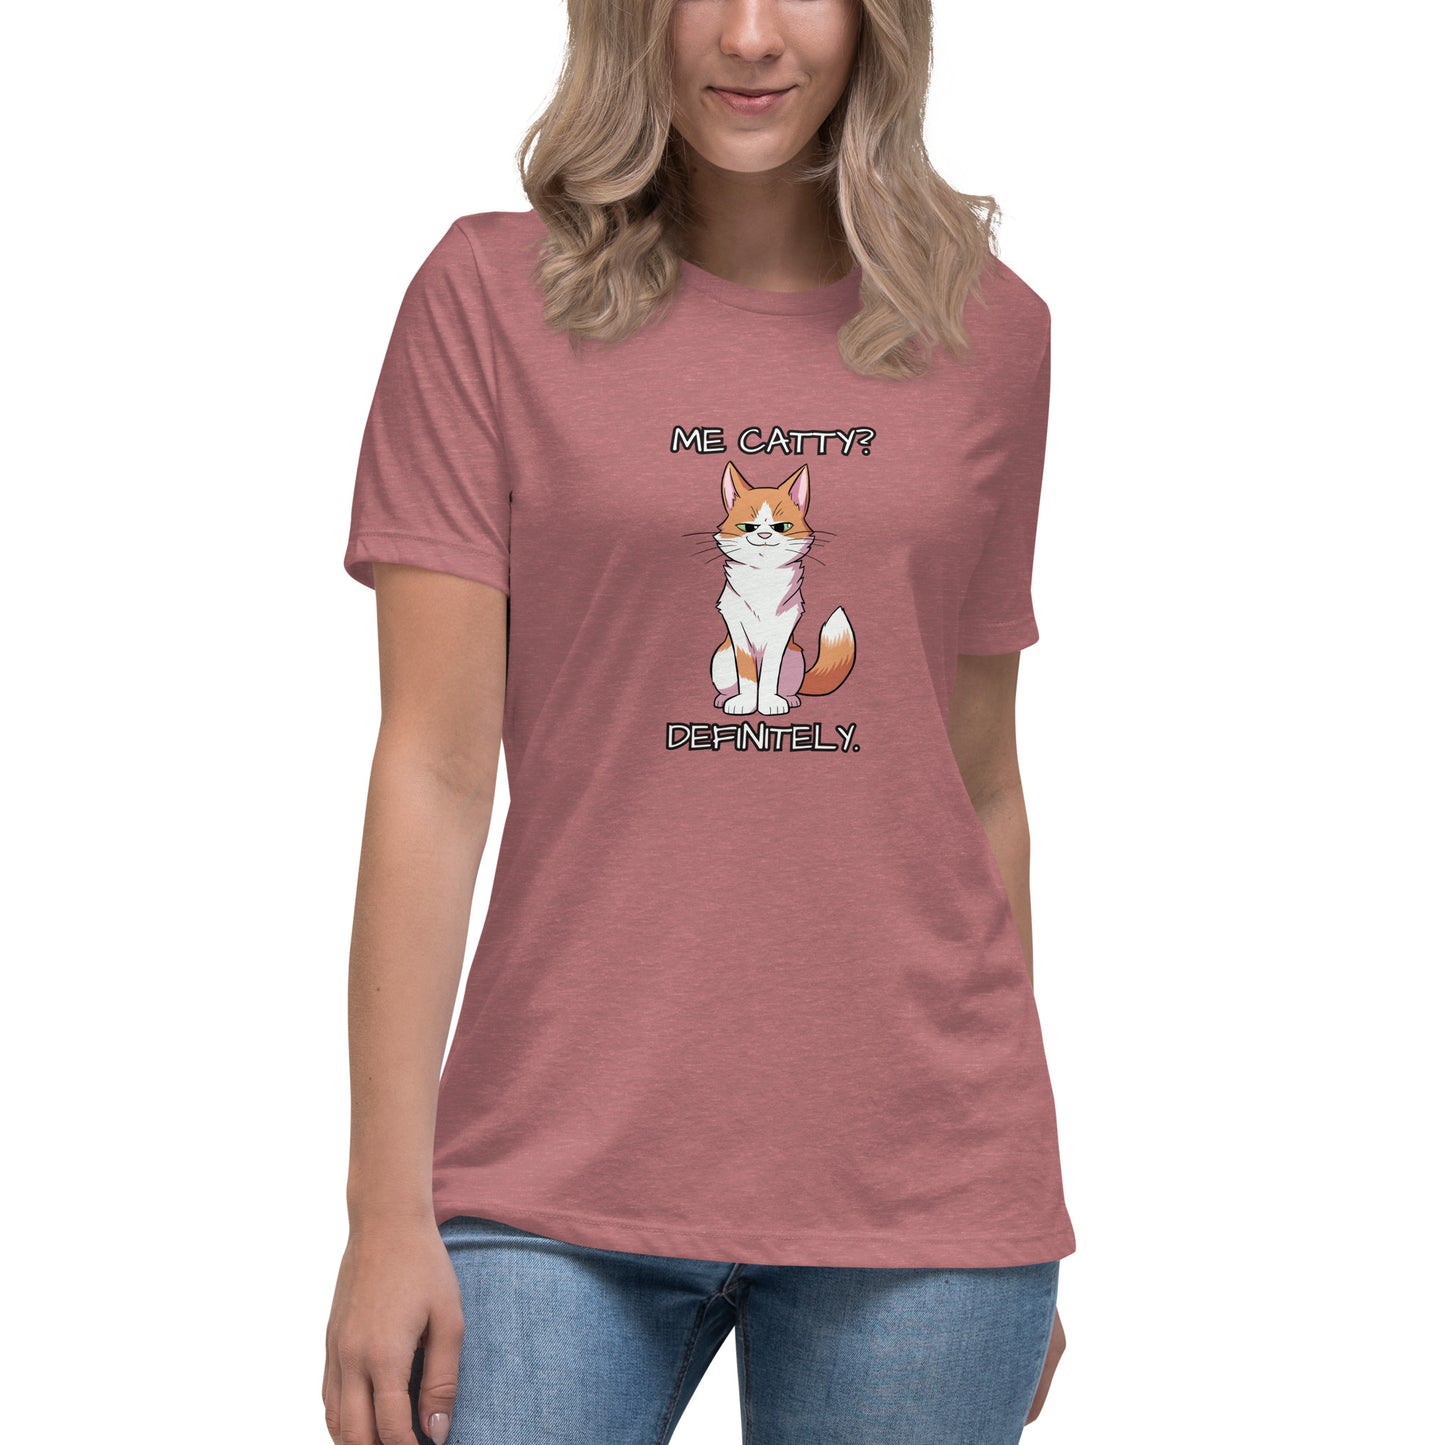 Ginger - Me Catty? Definitely. Women's Relaxed T-Shirt